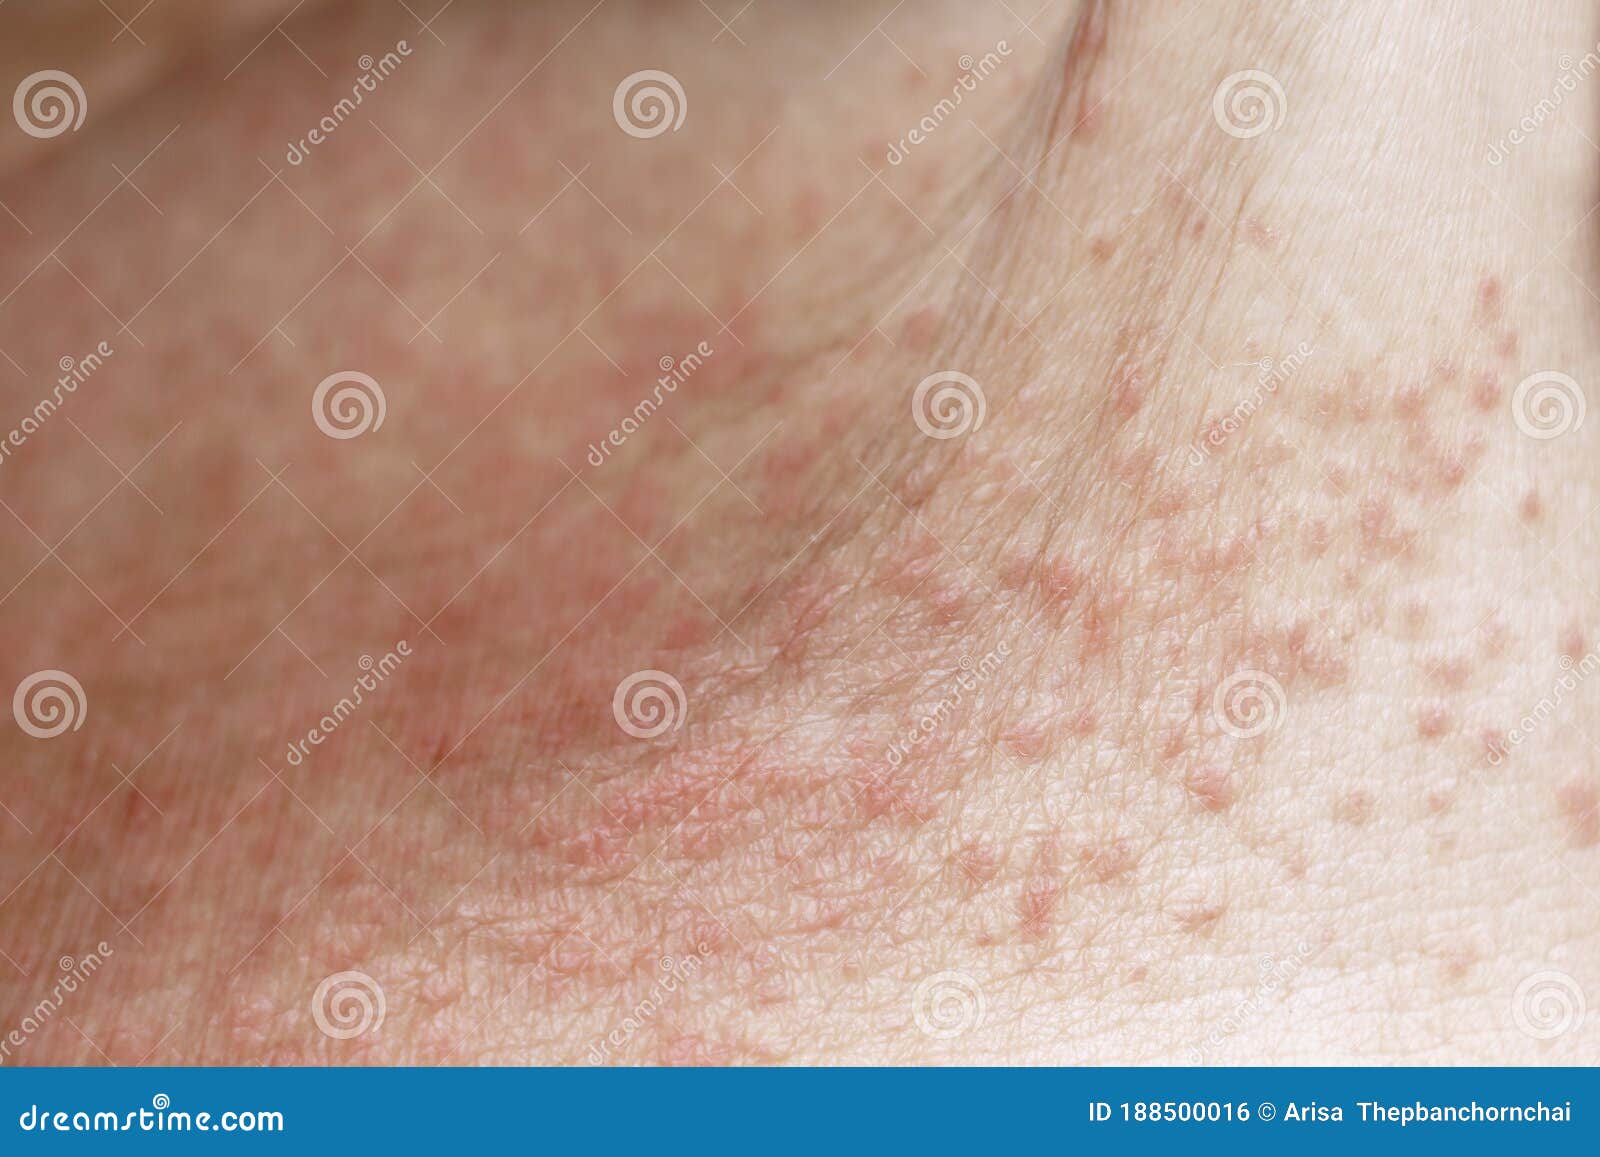 Skin Disease Prickly Heat Rash or Miliaria on Belly Skin of Woman